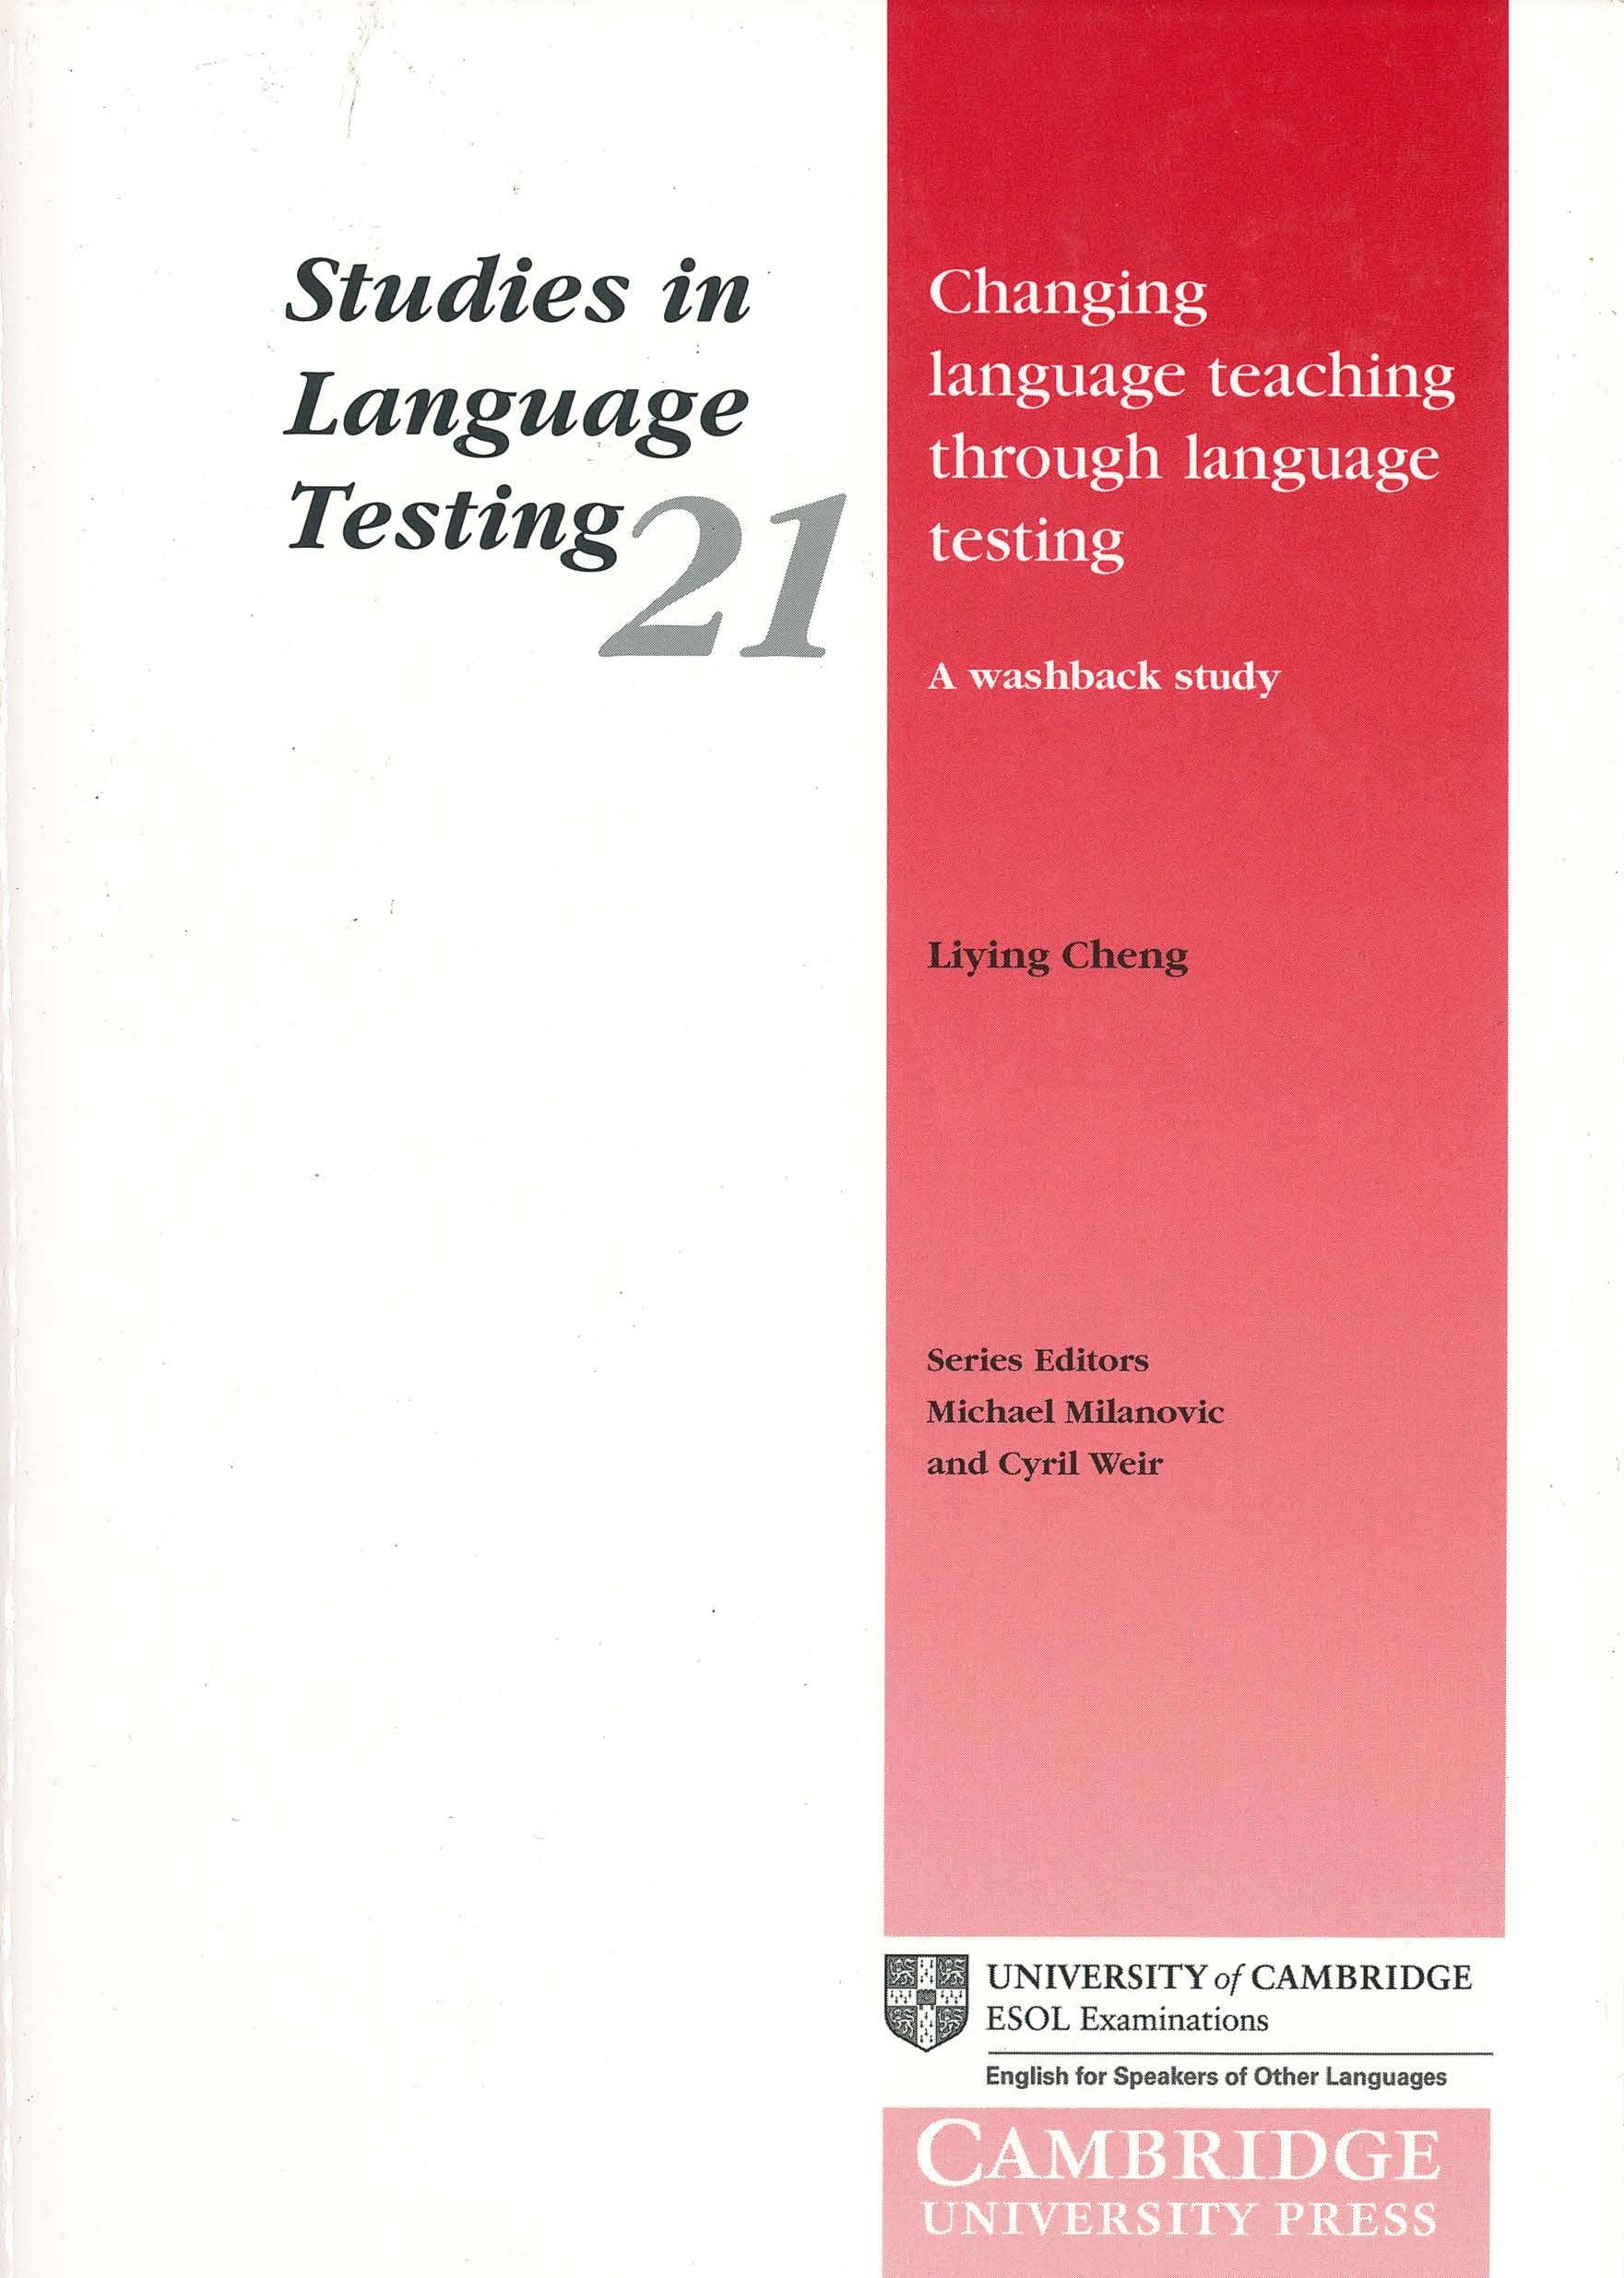 原文現貨 Changing Language Teaching through Language Testing 透過語言測試改變語言教學